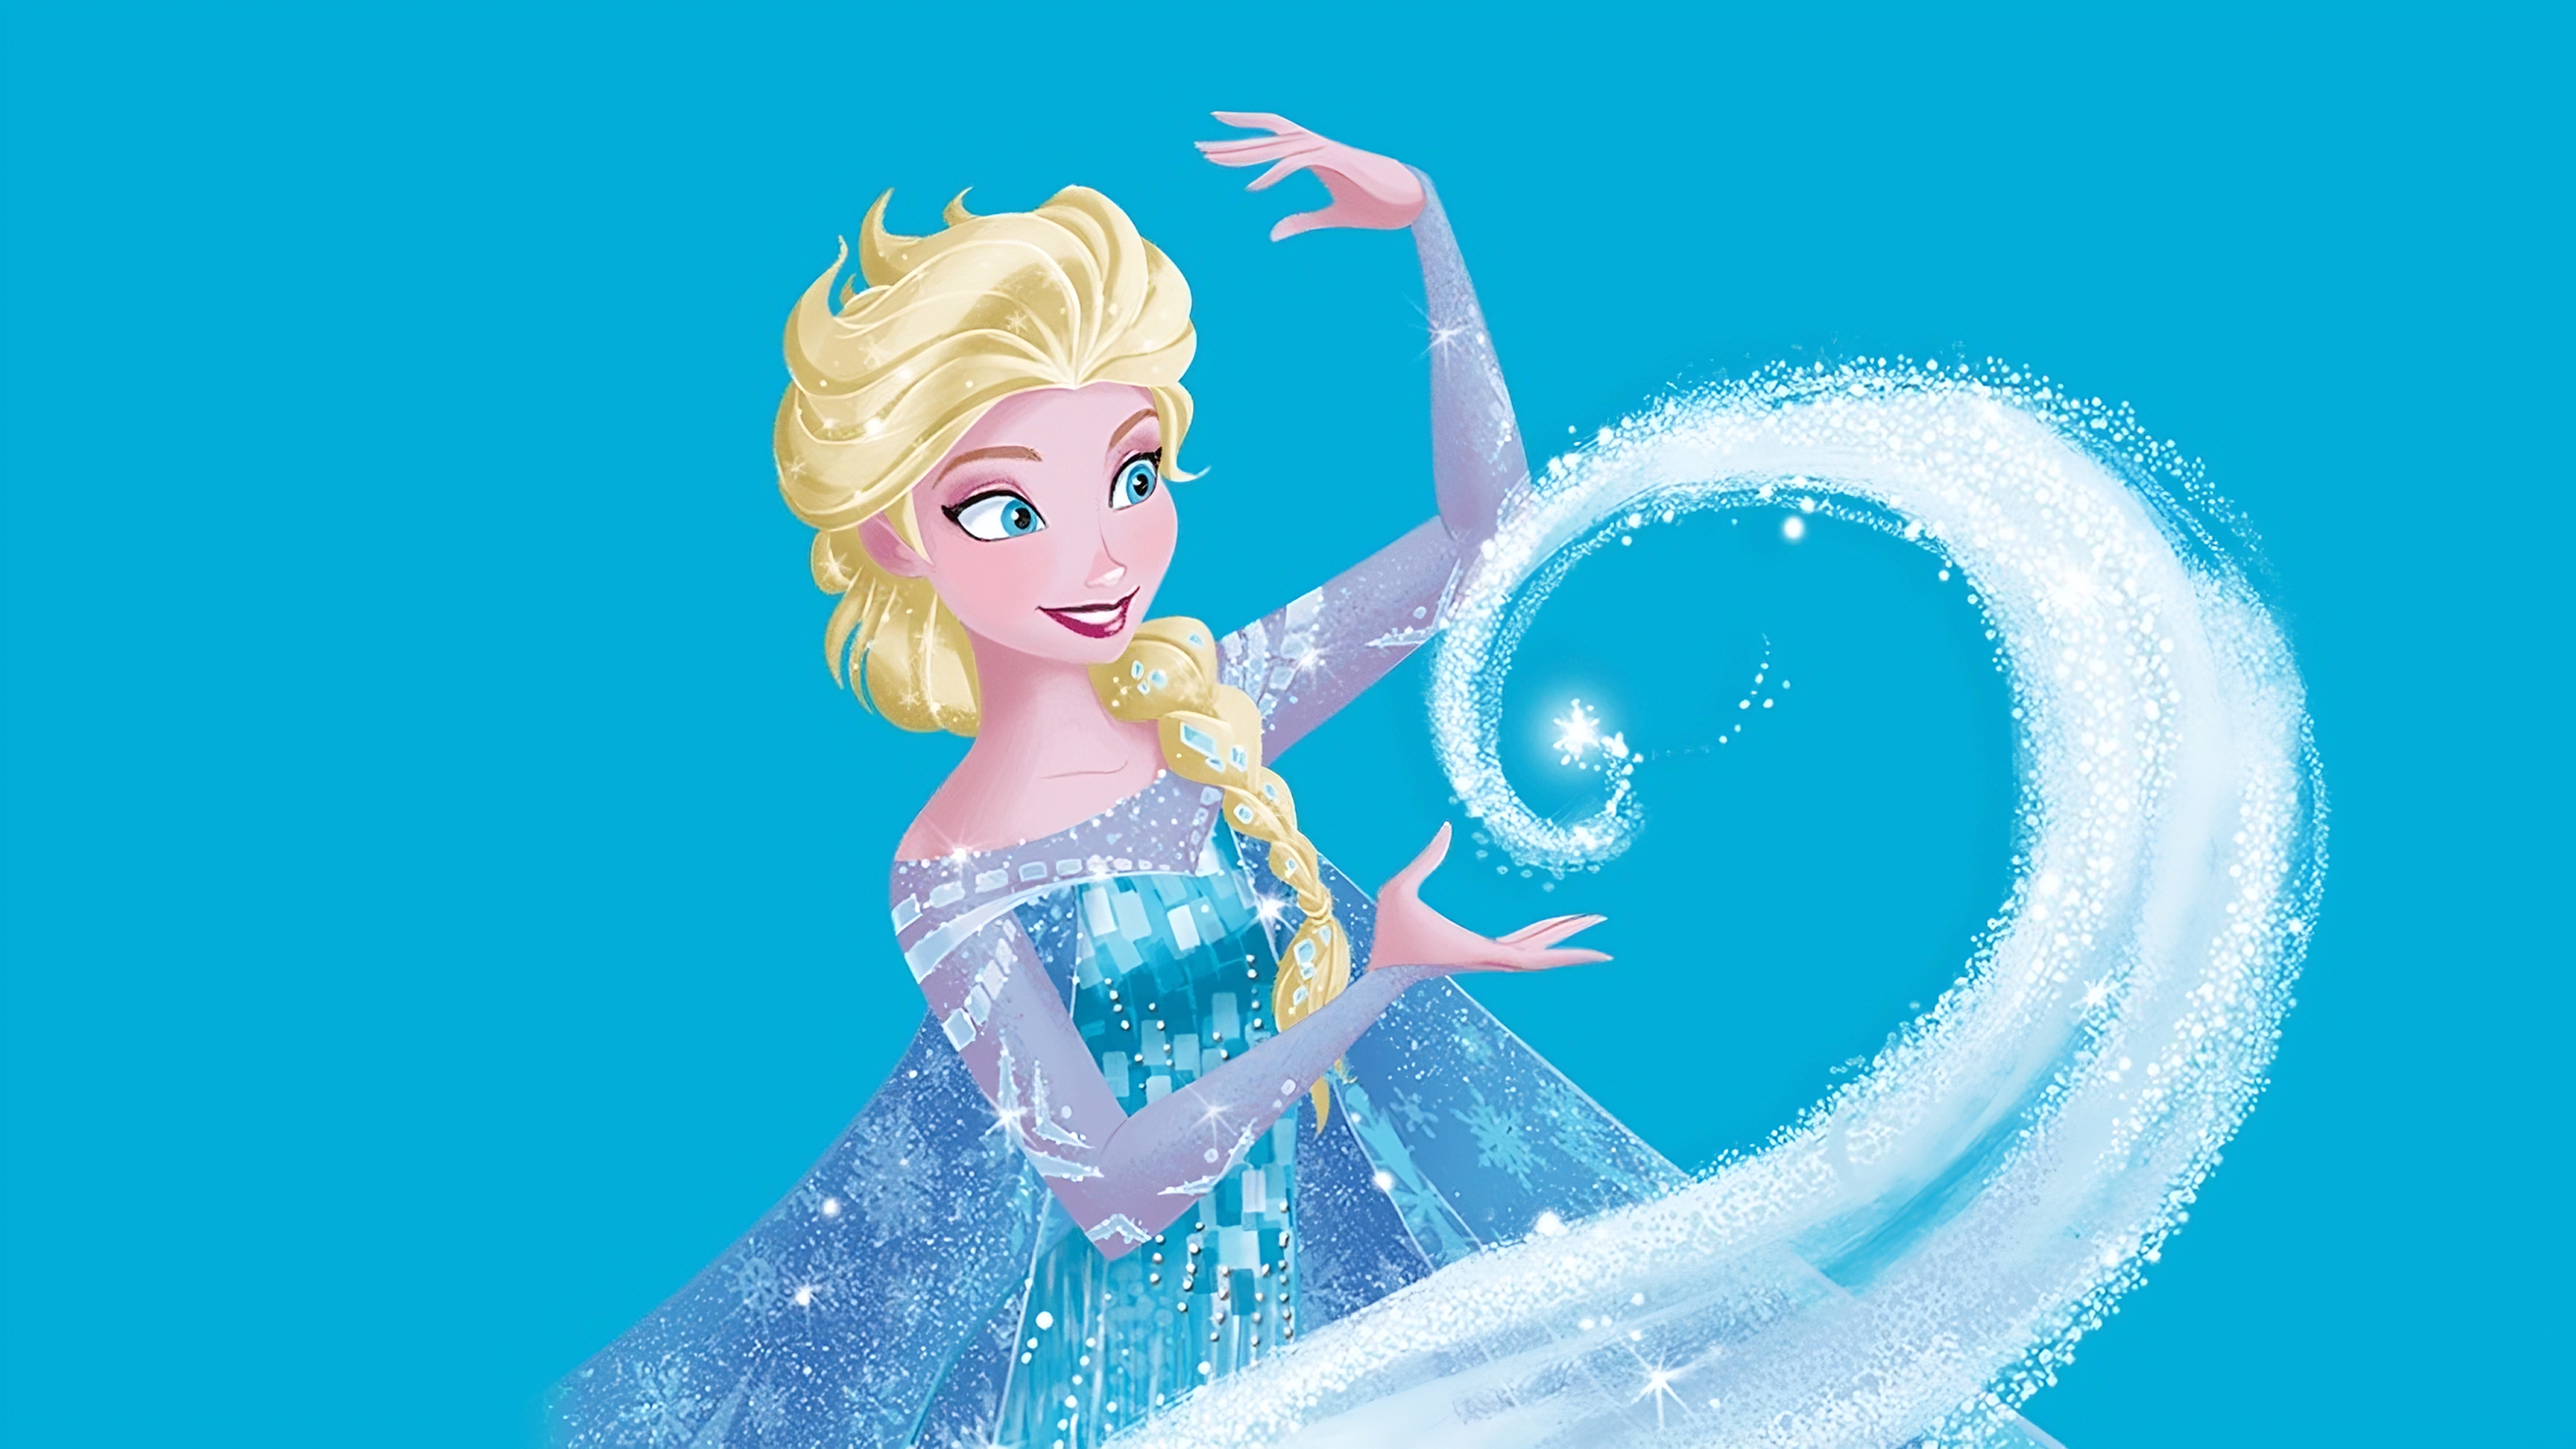 4K] Disney Princess - Elsa Frozen (1) by AlexandreGRONDIN on DeviantArt